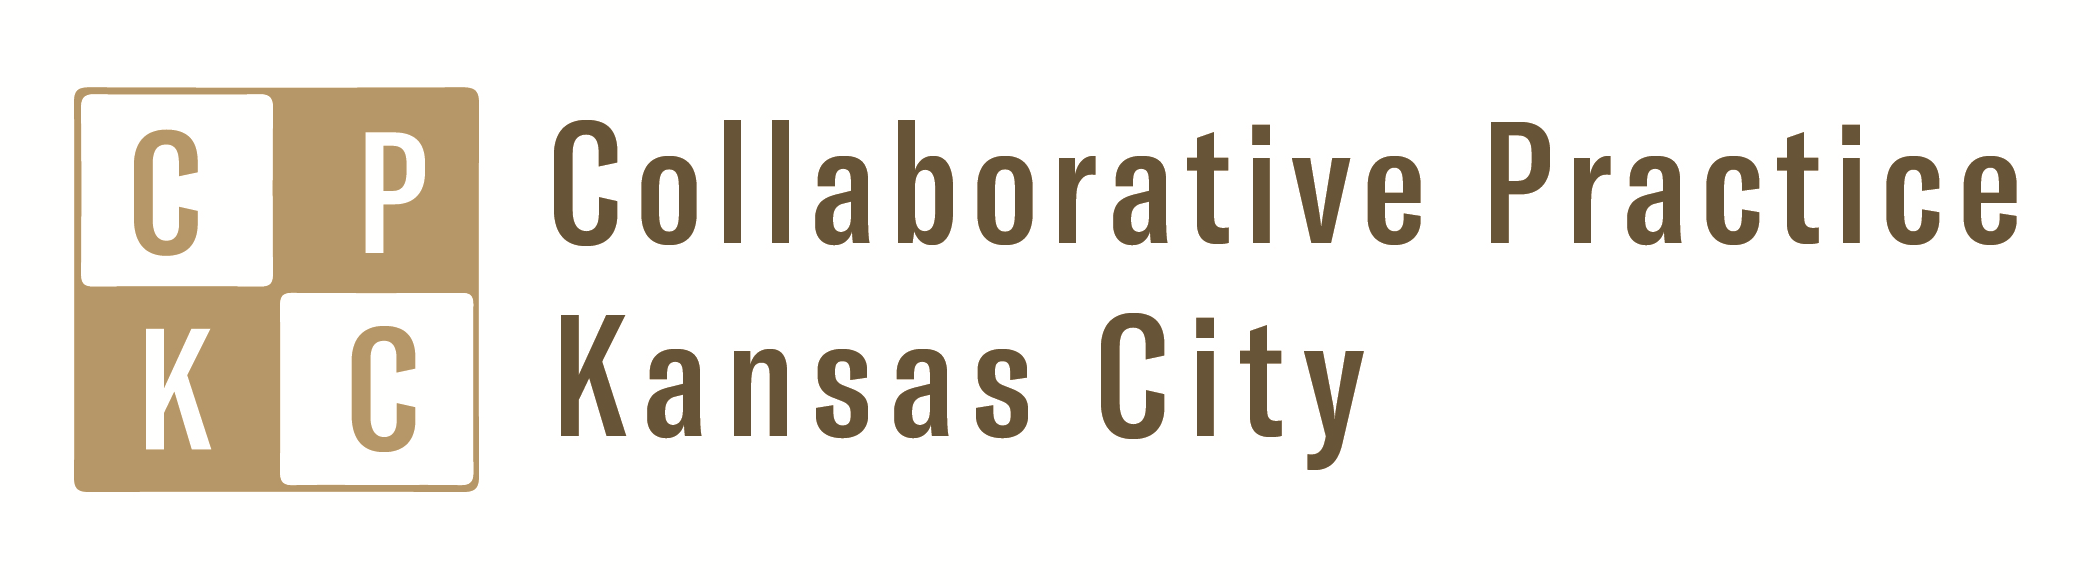 Collaborative Practice Kansas City